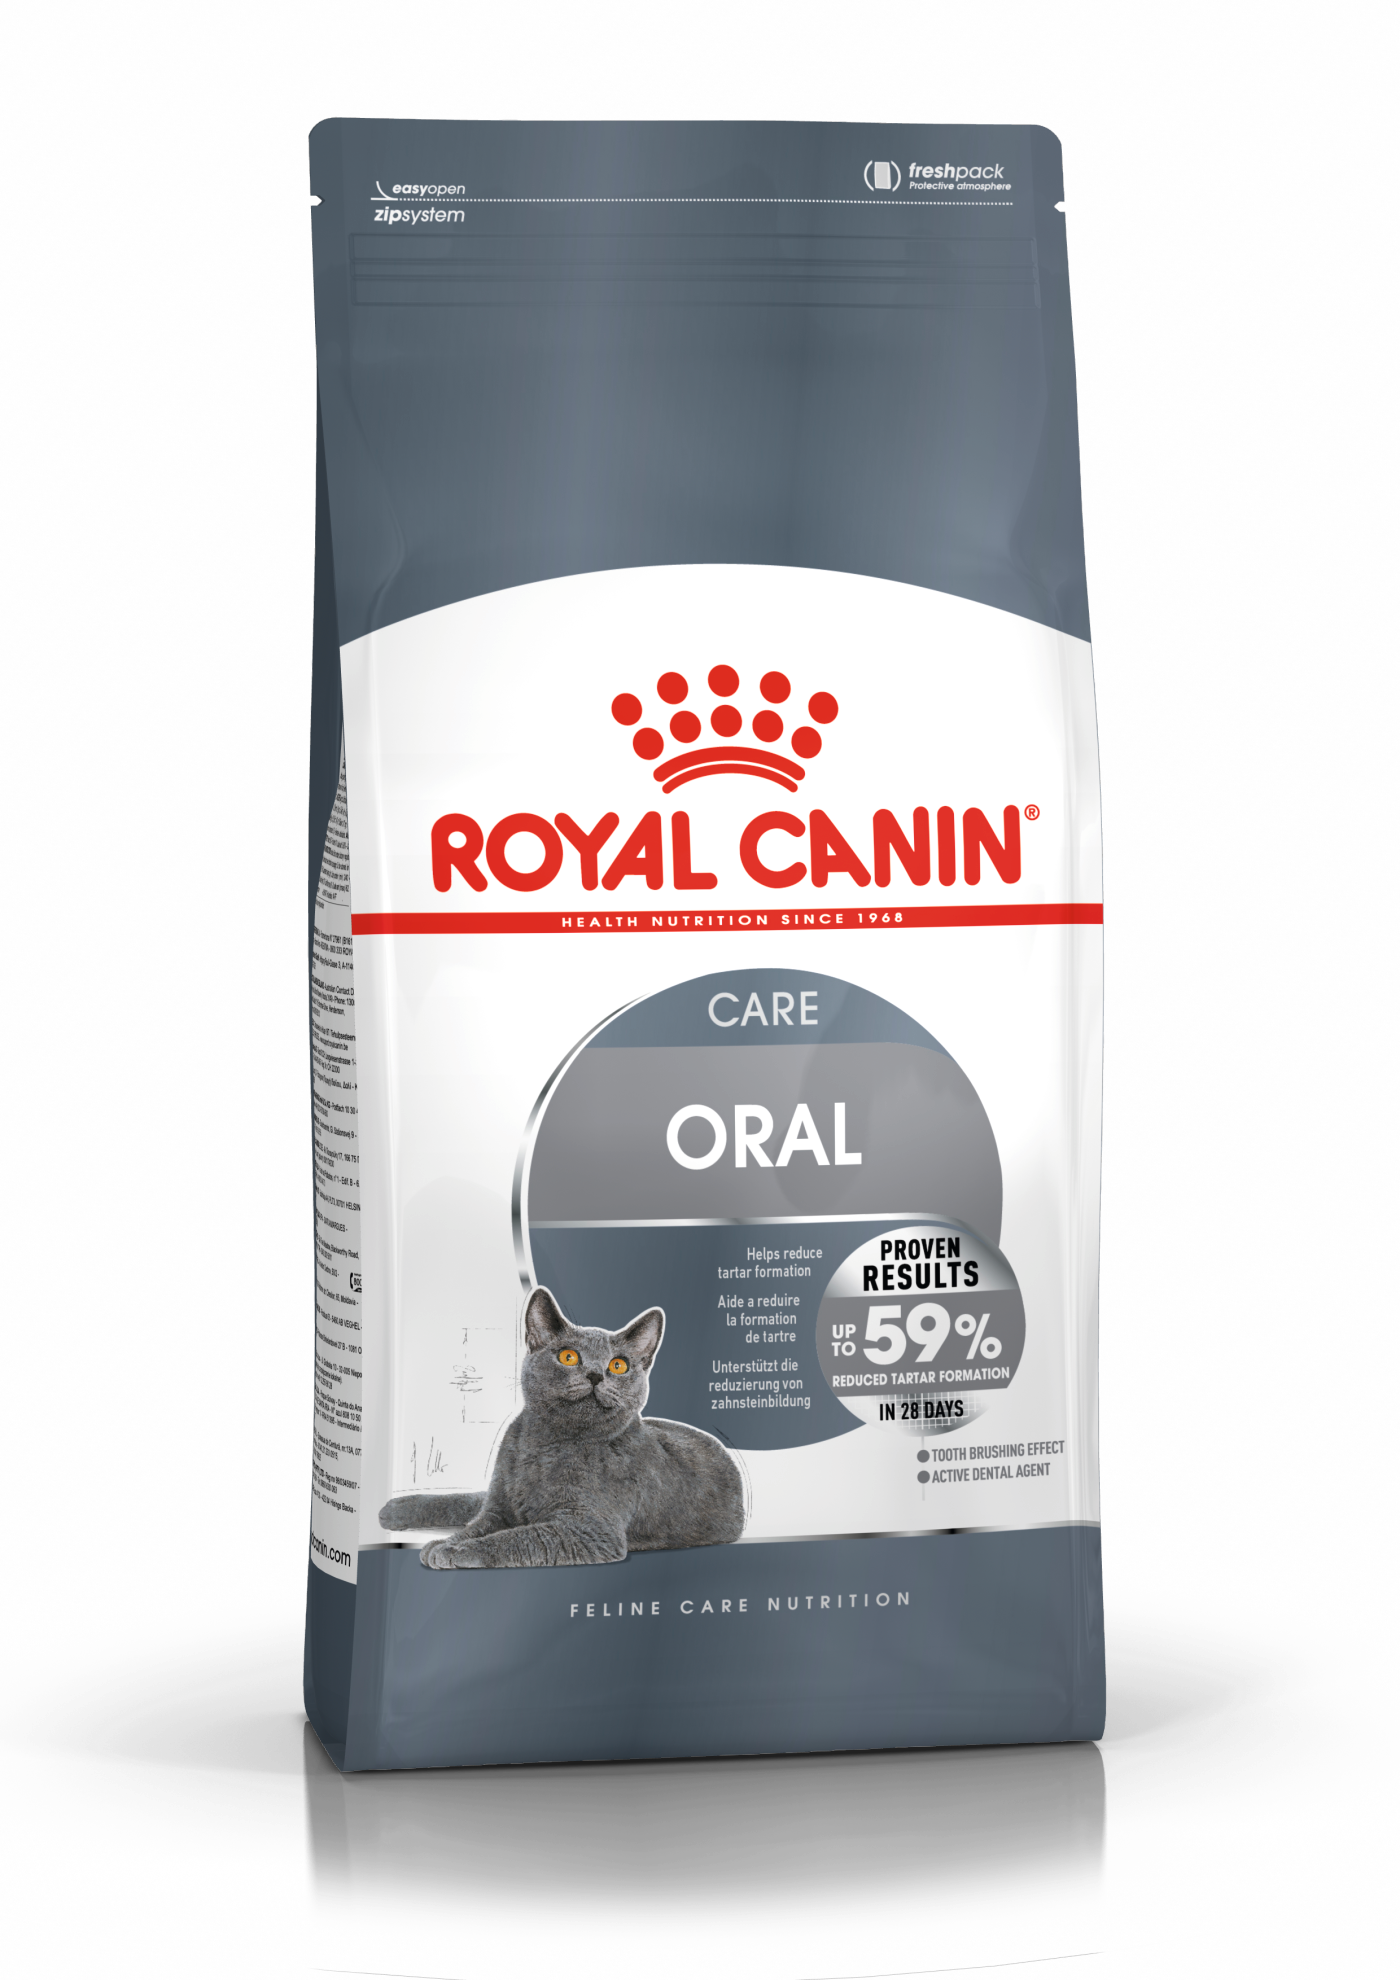 royal canin cat food